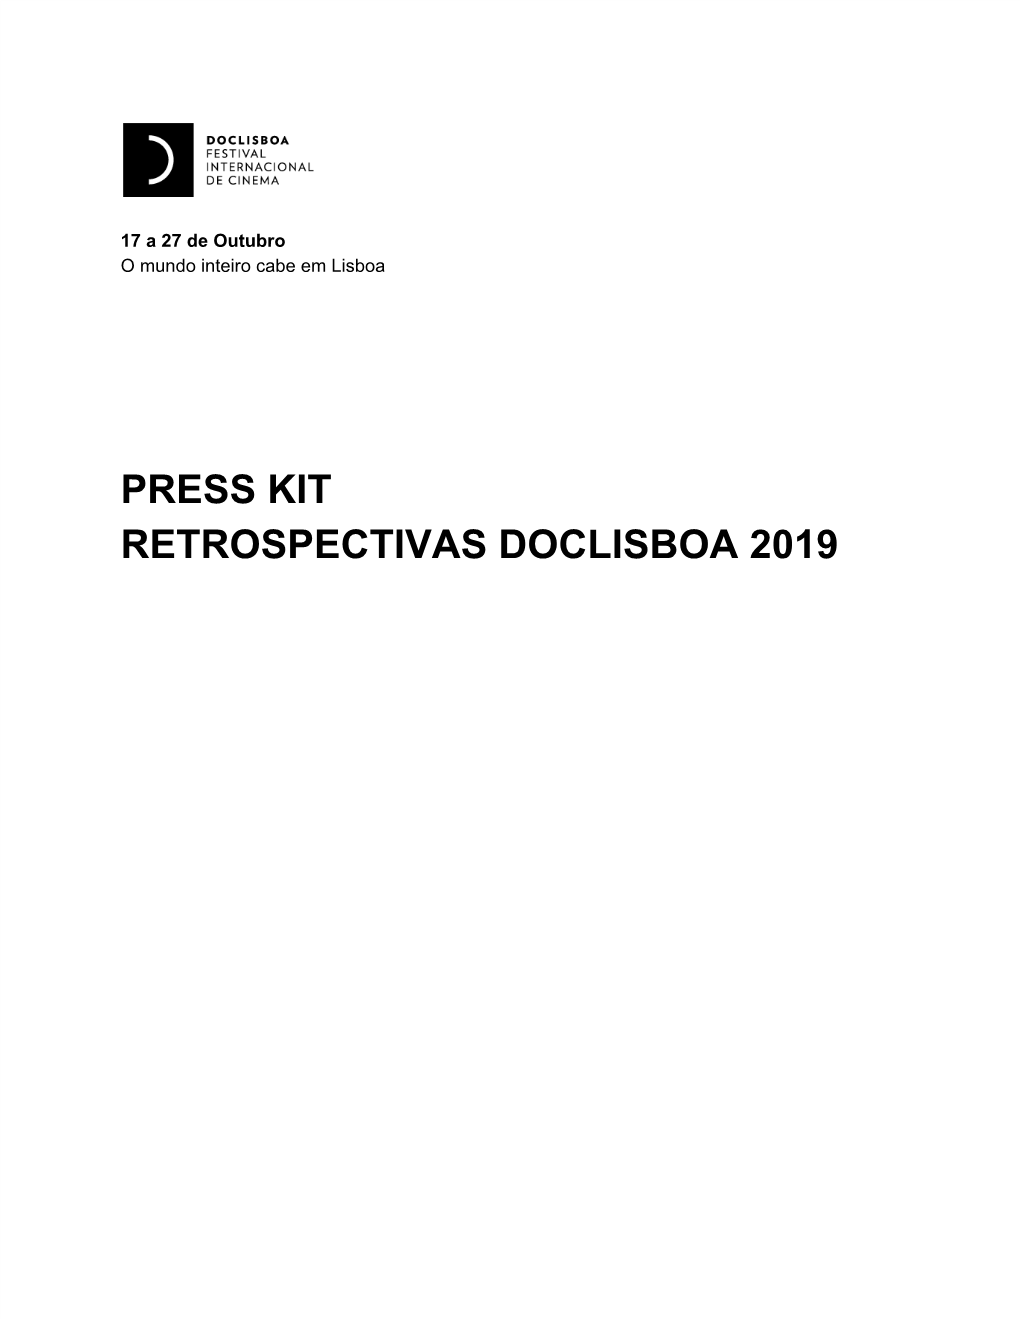 Press Kit Retrospectivas Doclisboa 2019